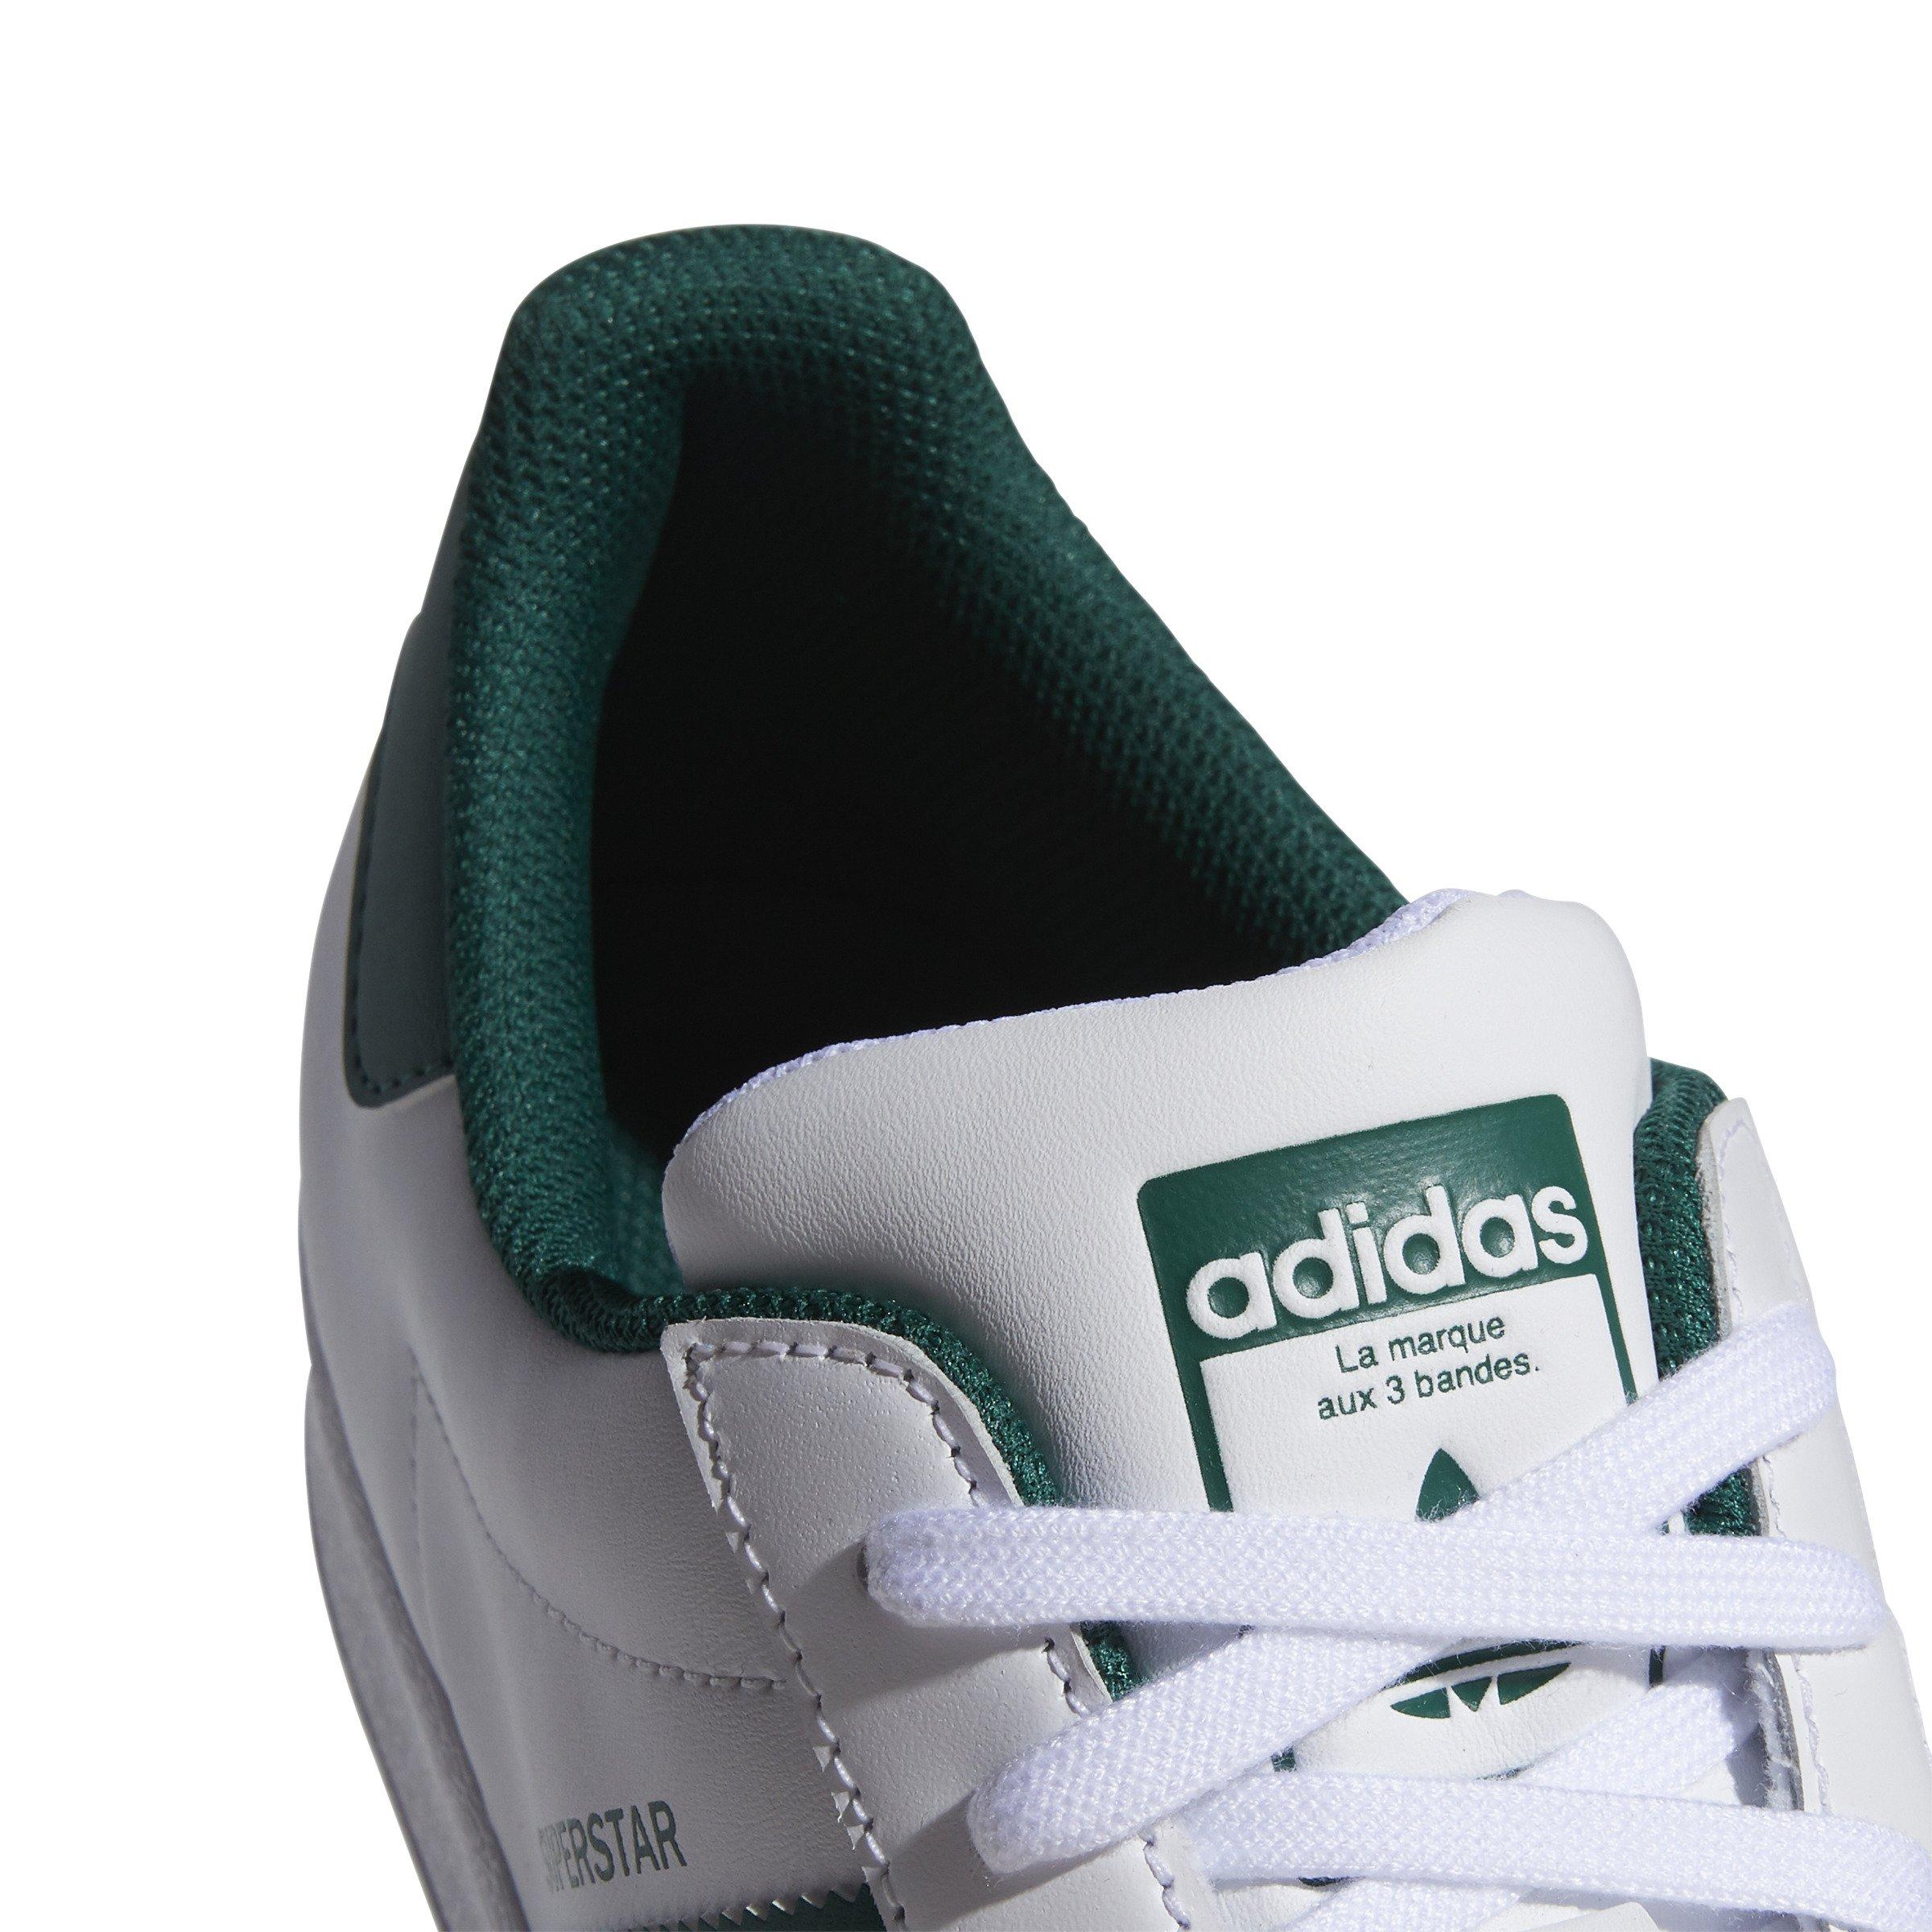 adidas Superstar 82 White Collegiate Green, Where To Buy